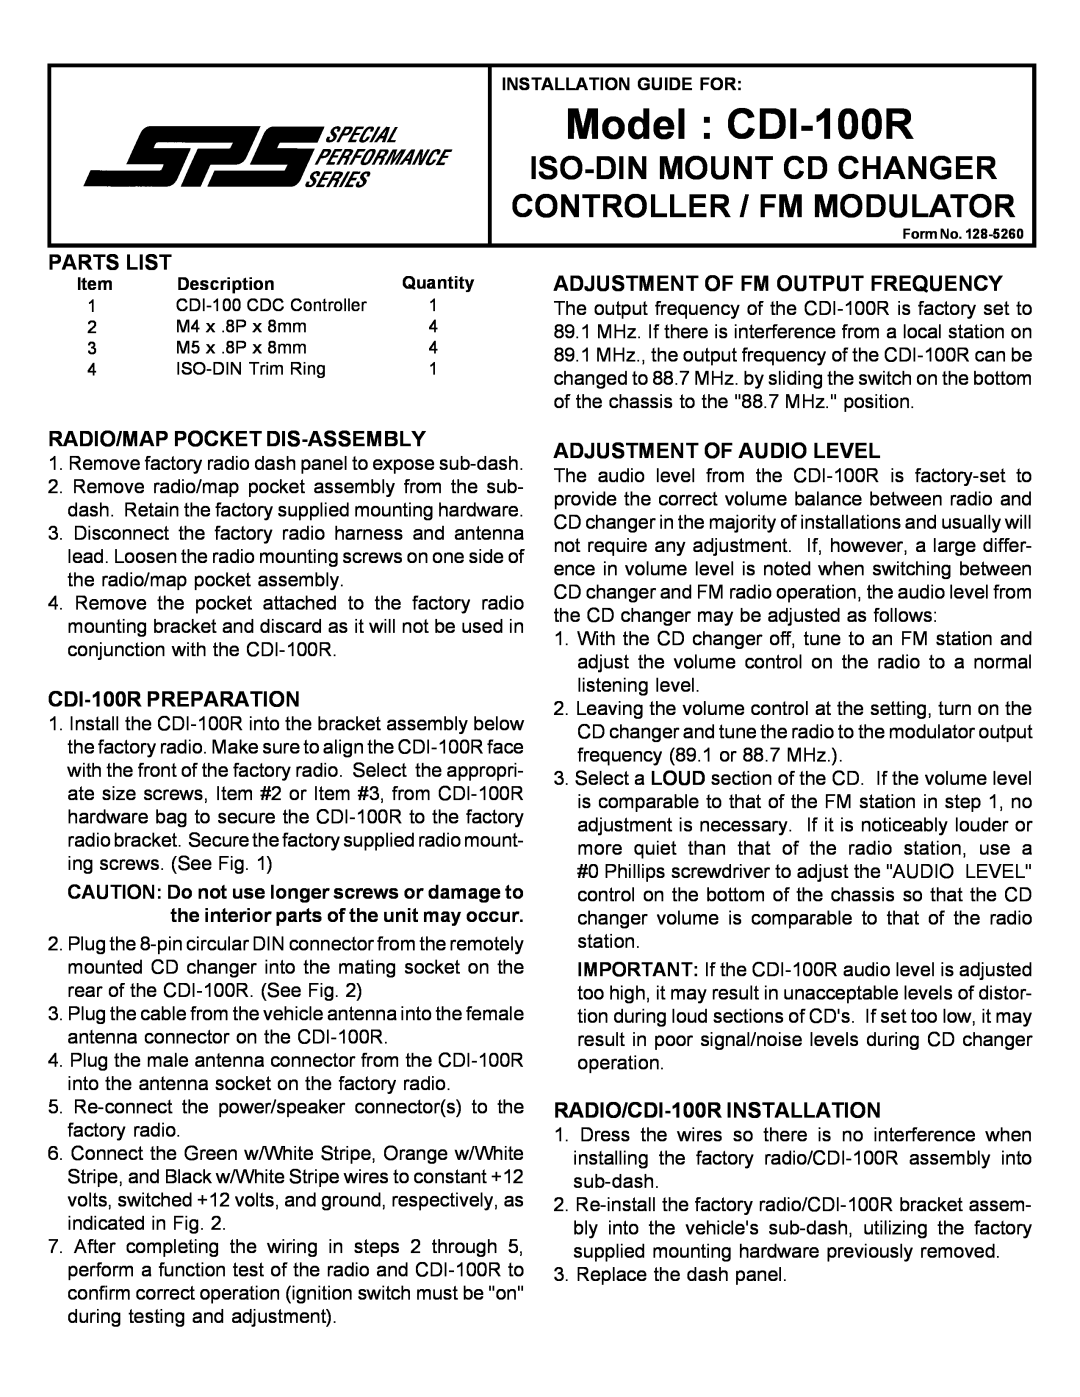 Audiovox manual Model CDI-100R, Iso-Dinmount Cd Changer Controller / Fm Modulator, Parts List, CDI-100RPREPARATION 